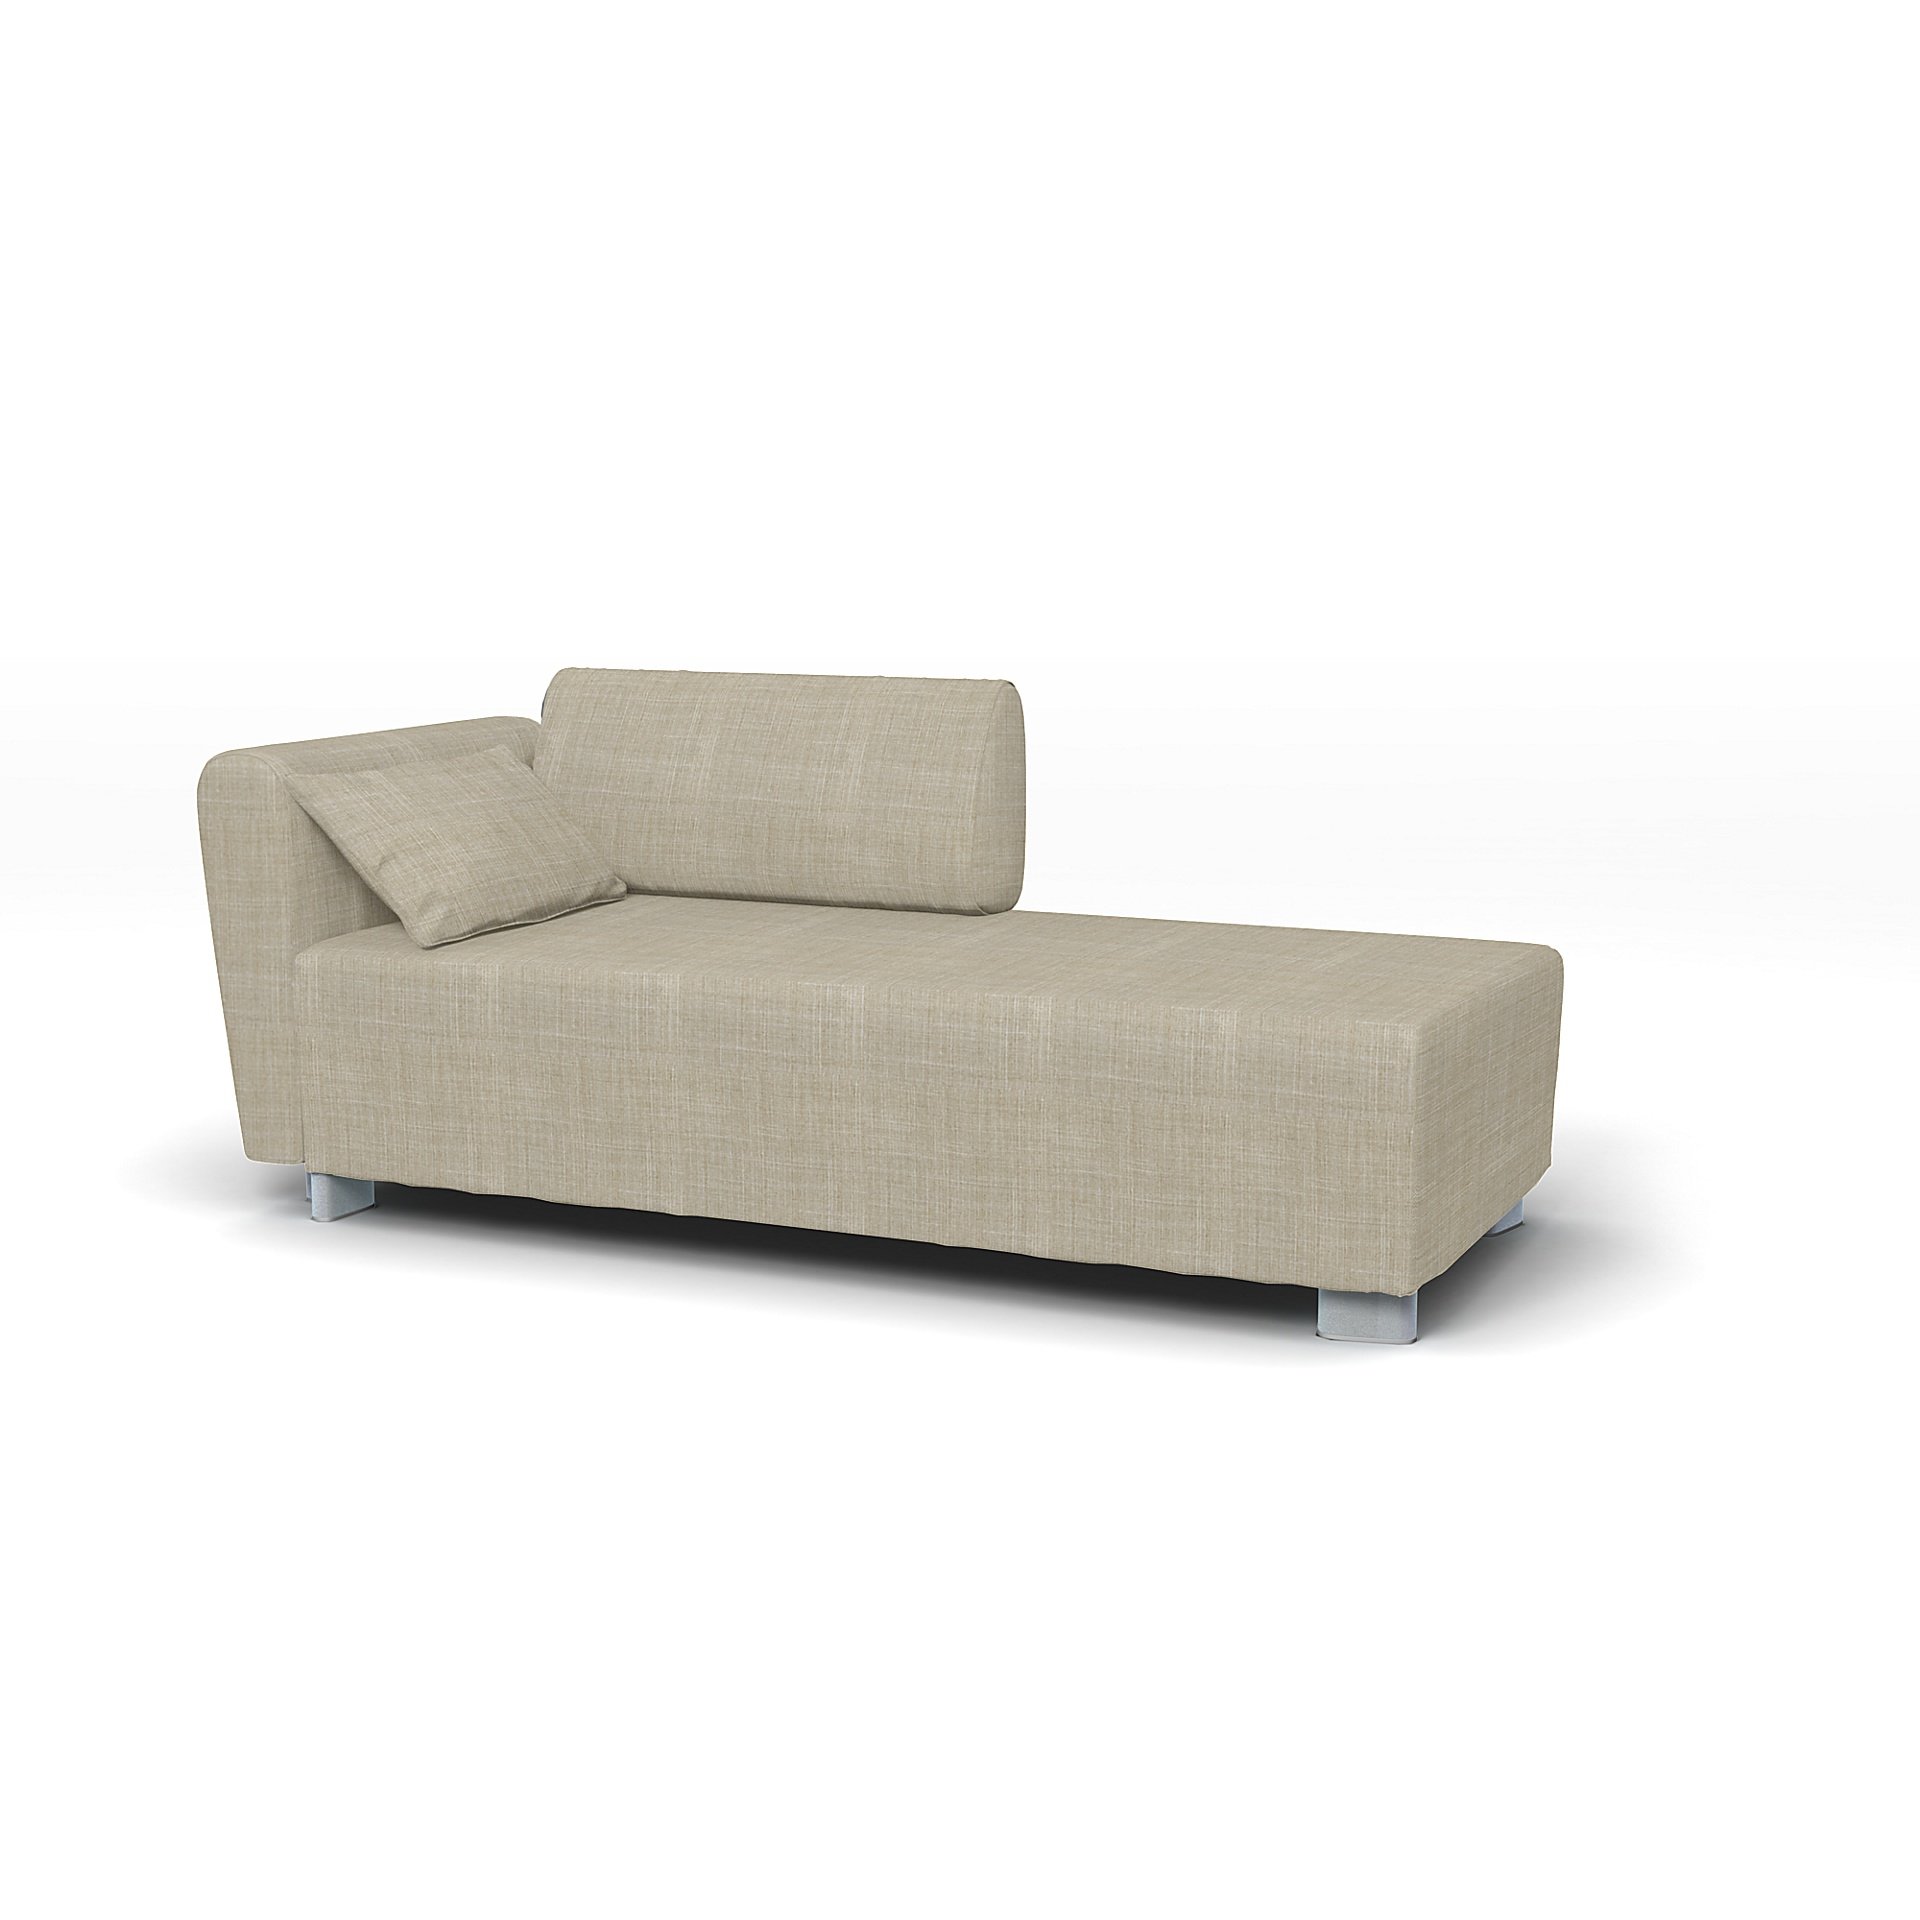 IKEA - Mysinge Chaise Longue with Armrest Cover, Sand Beige, Boucle & Texture - Bemz